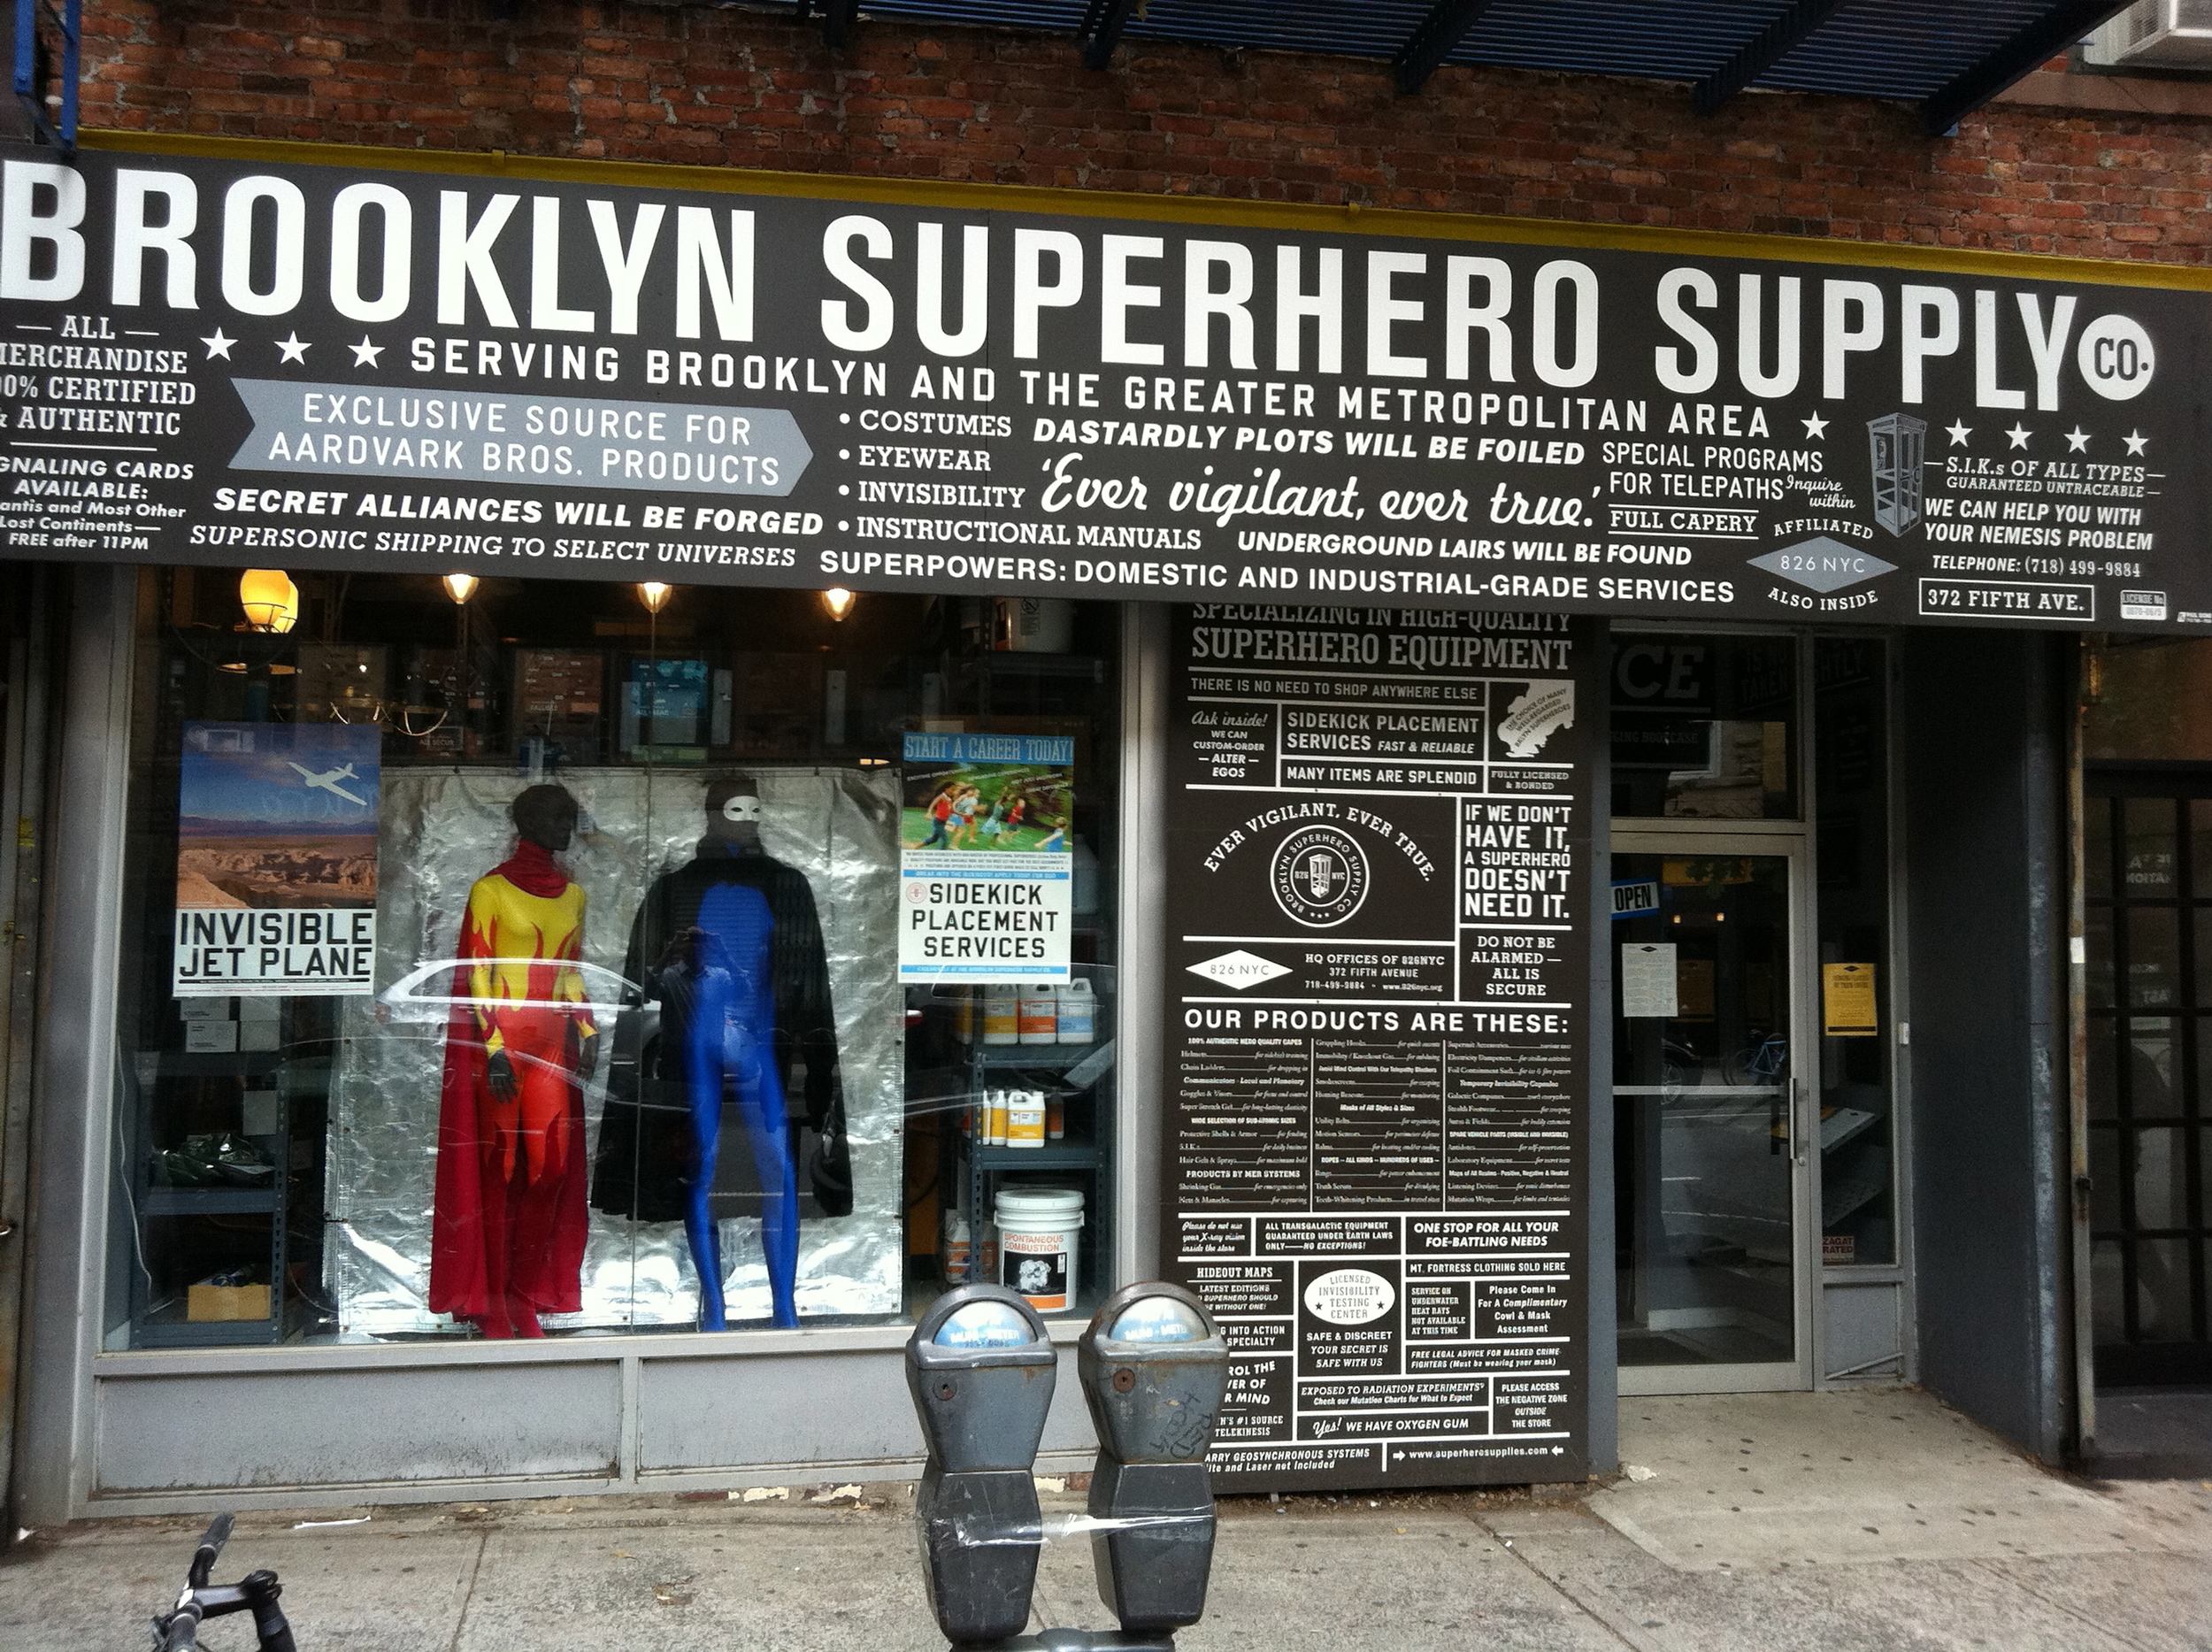 I was devillainized at the Brooklyn Superhero Supply Co.